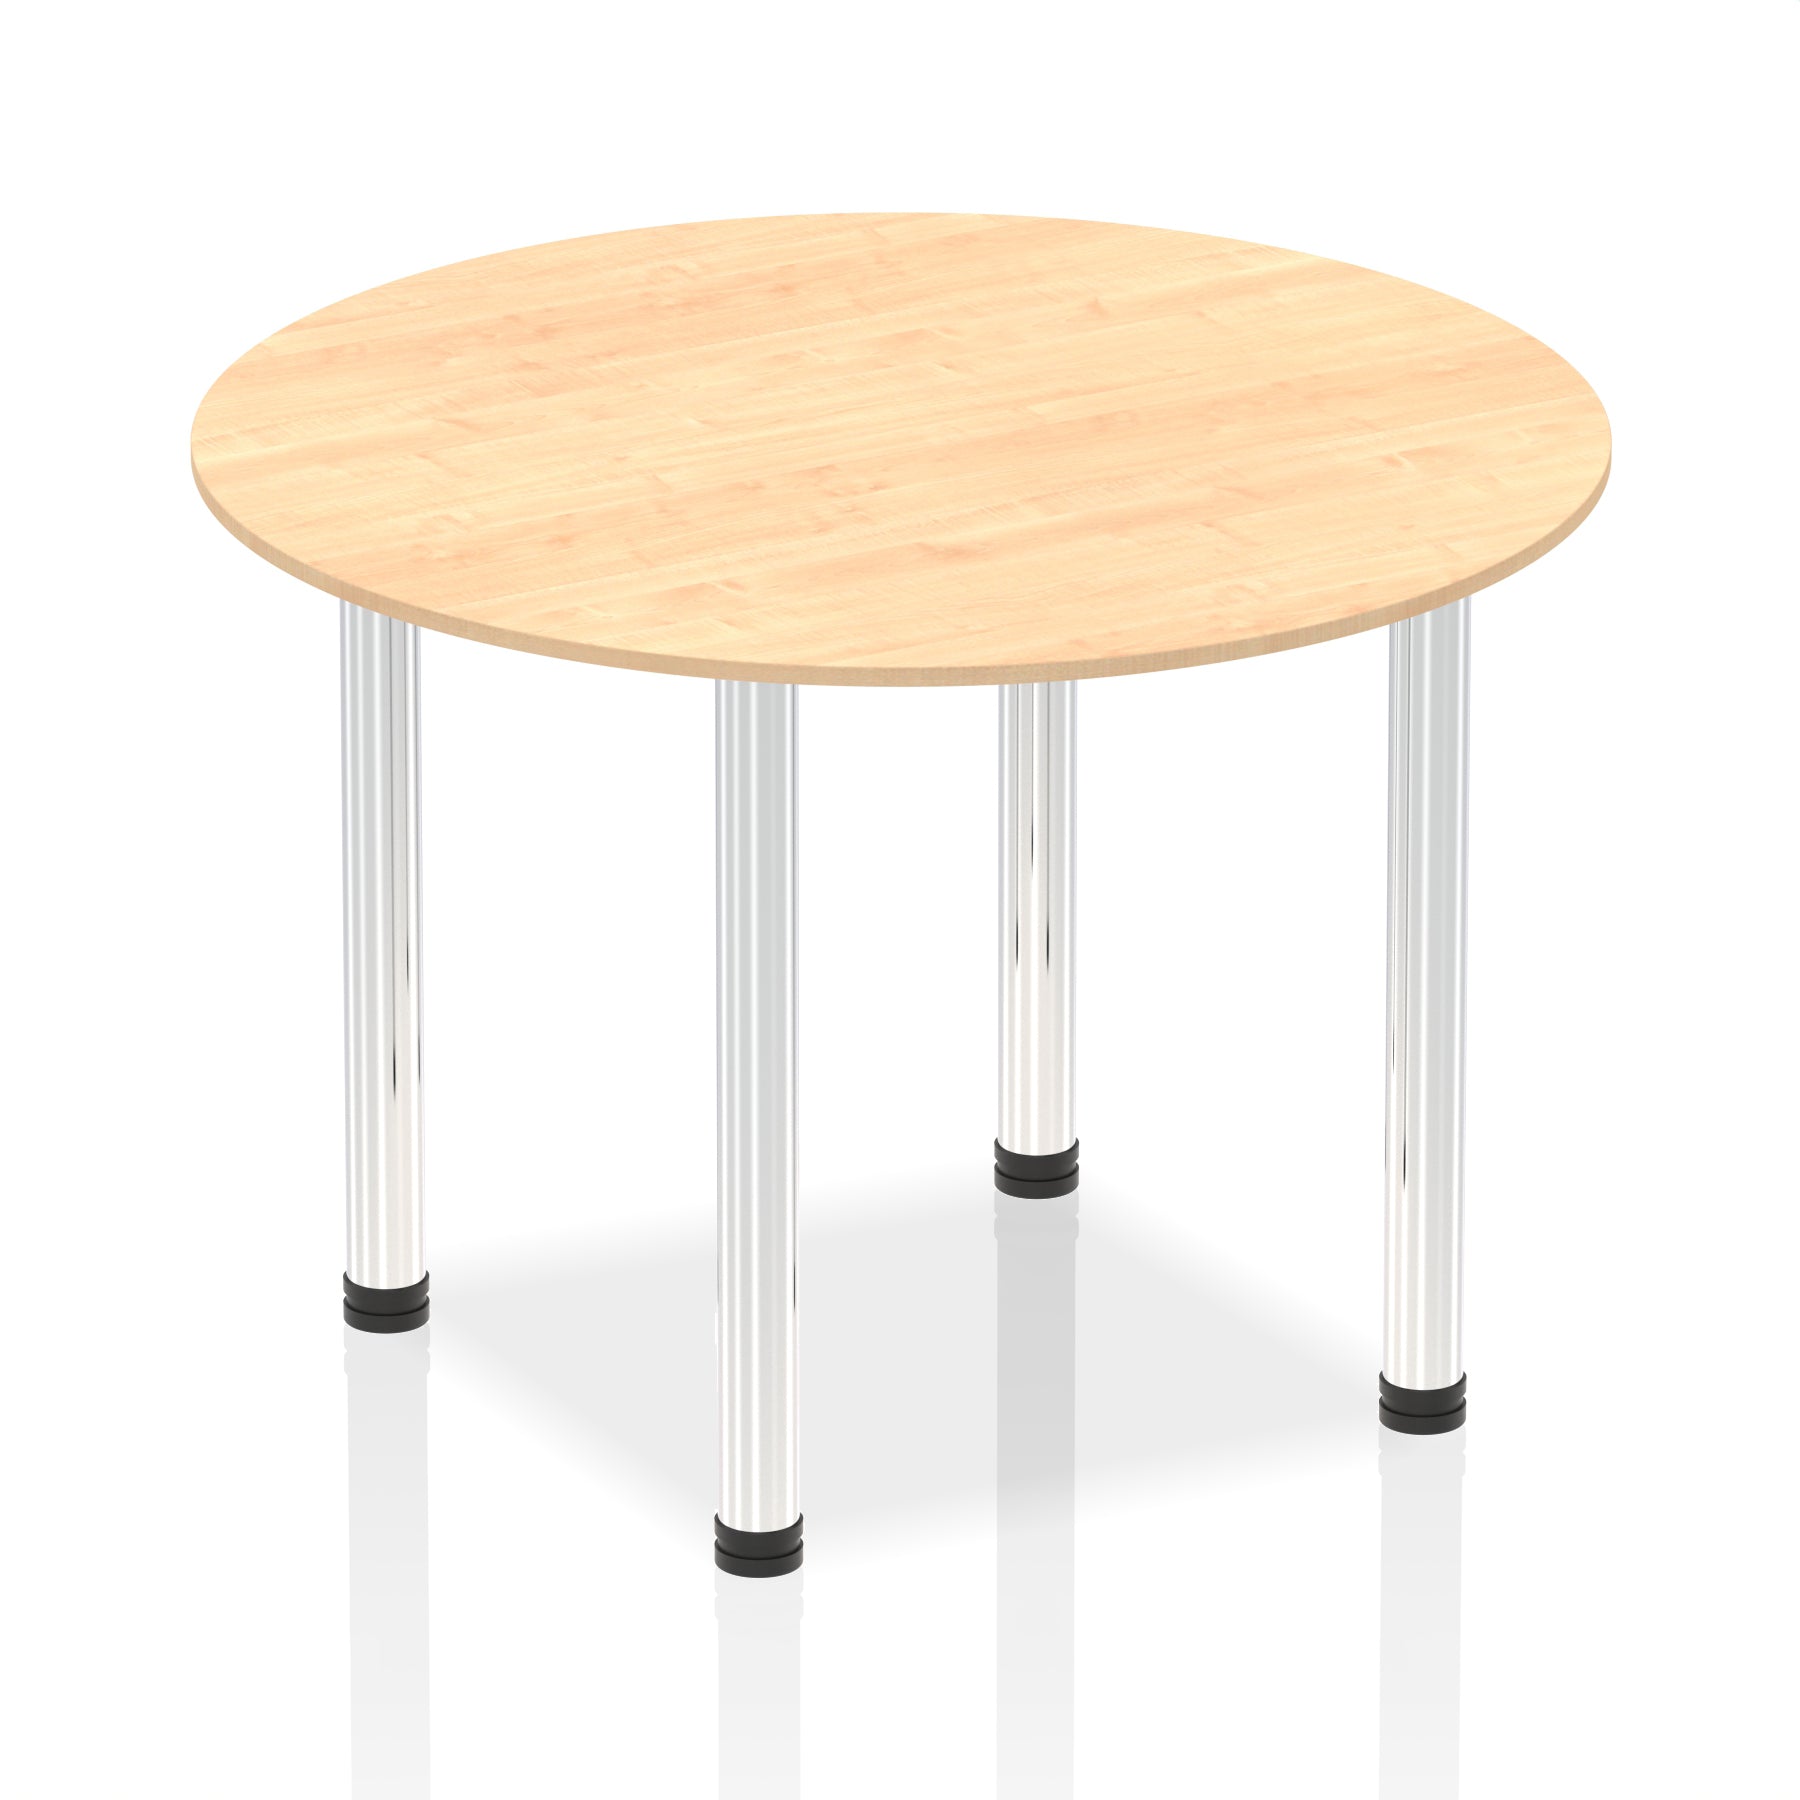 Impulse Round Table With Post Leg